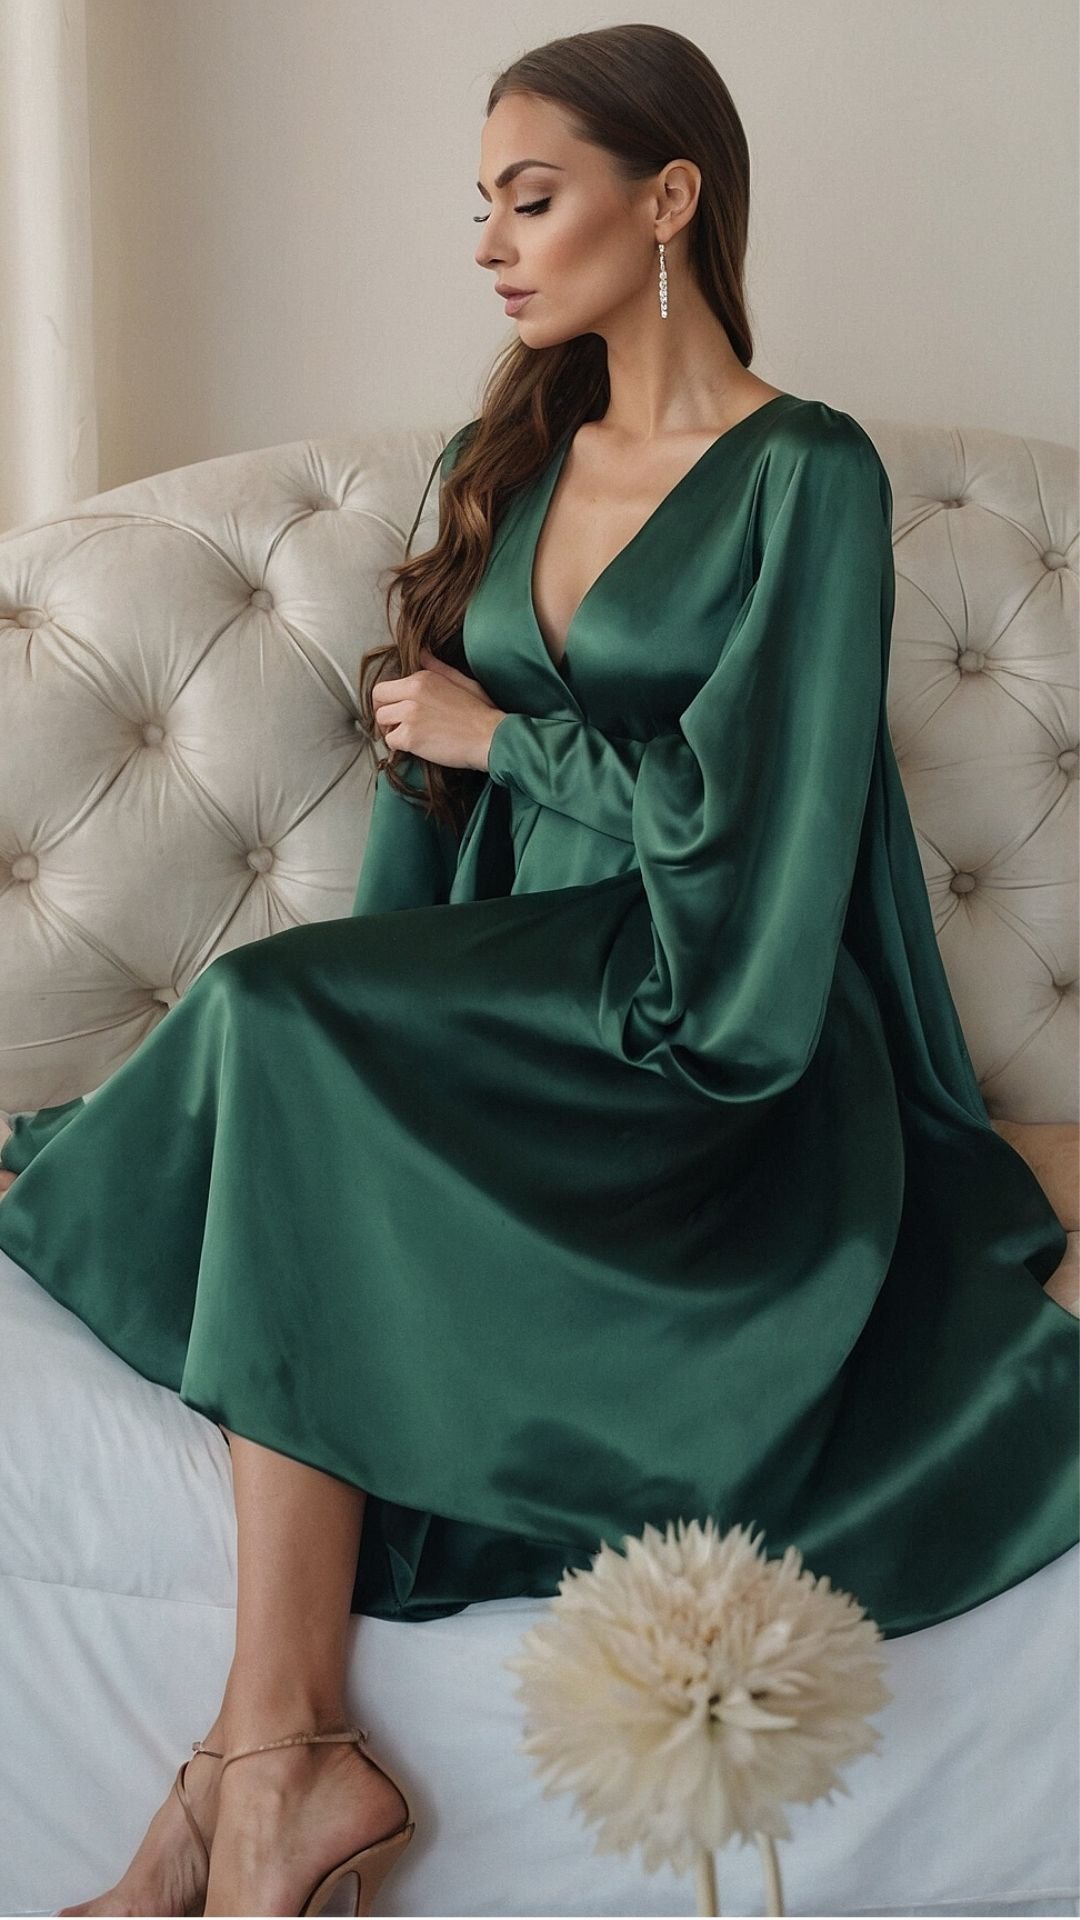 Emerald Elegance: Sophisticated Satin in Vintage Chic